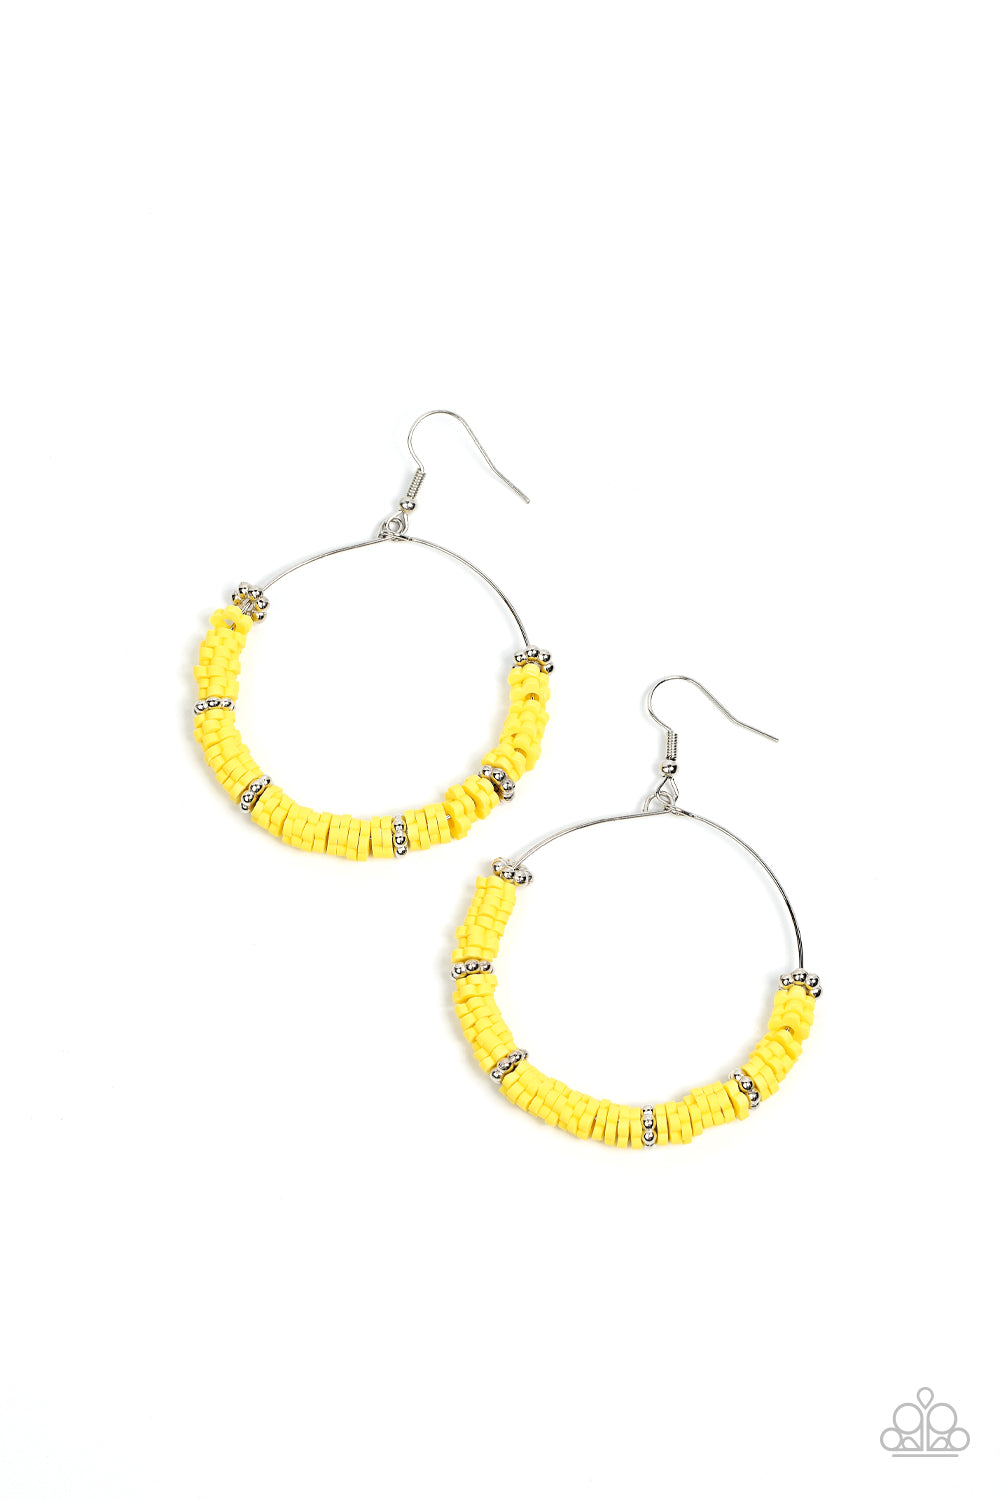 Loudly Layered - Yellow Earrings - Paparazzi Earrings